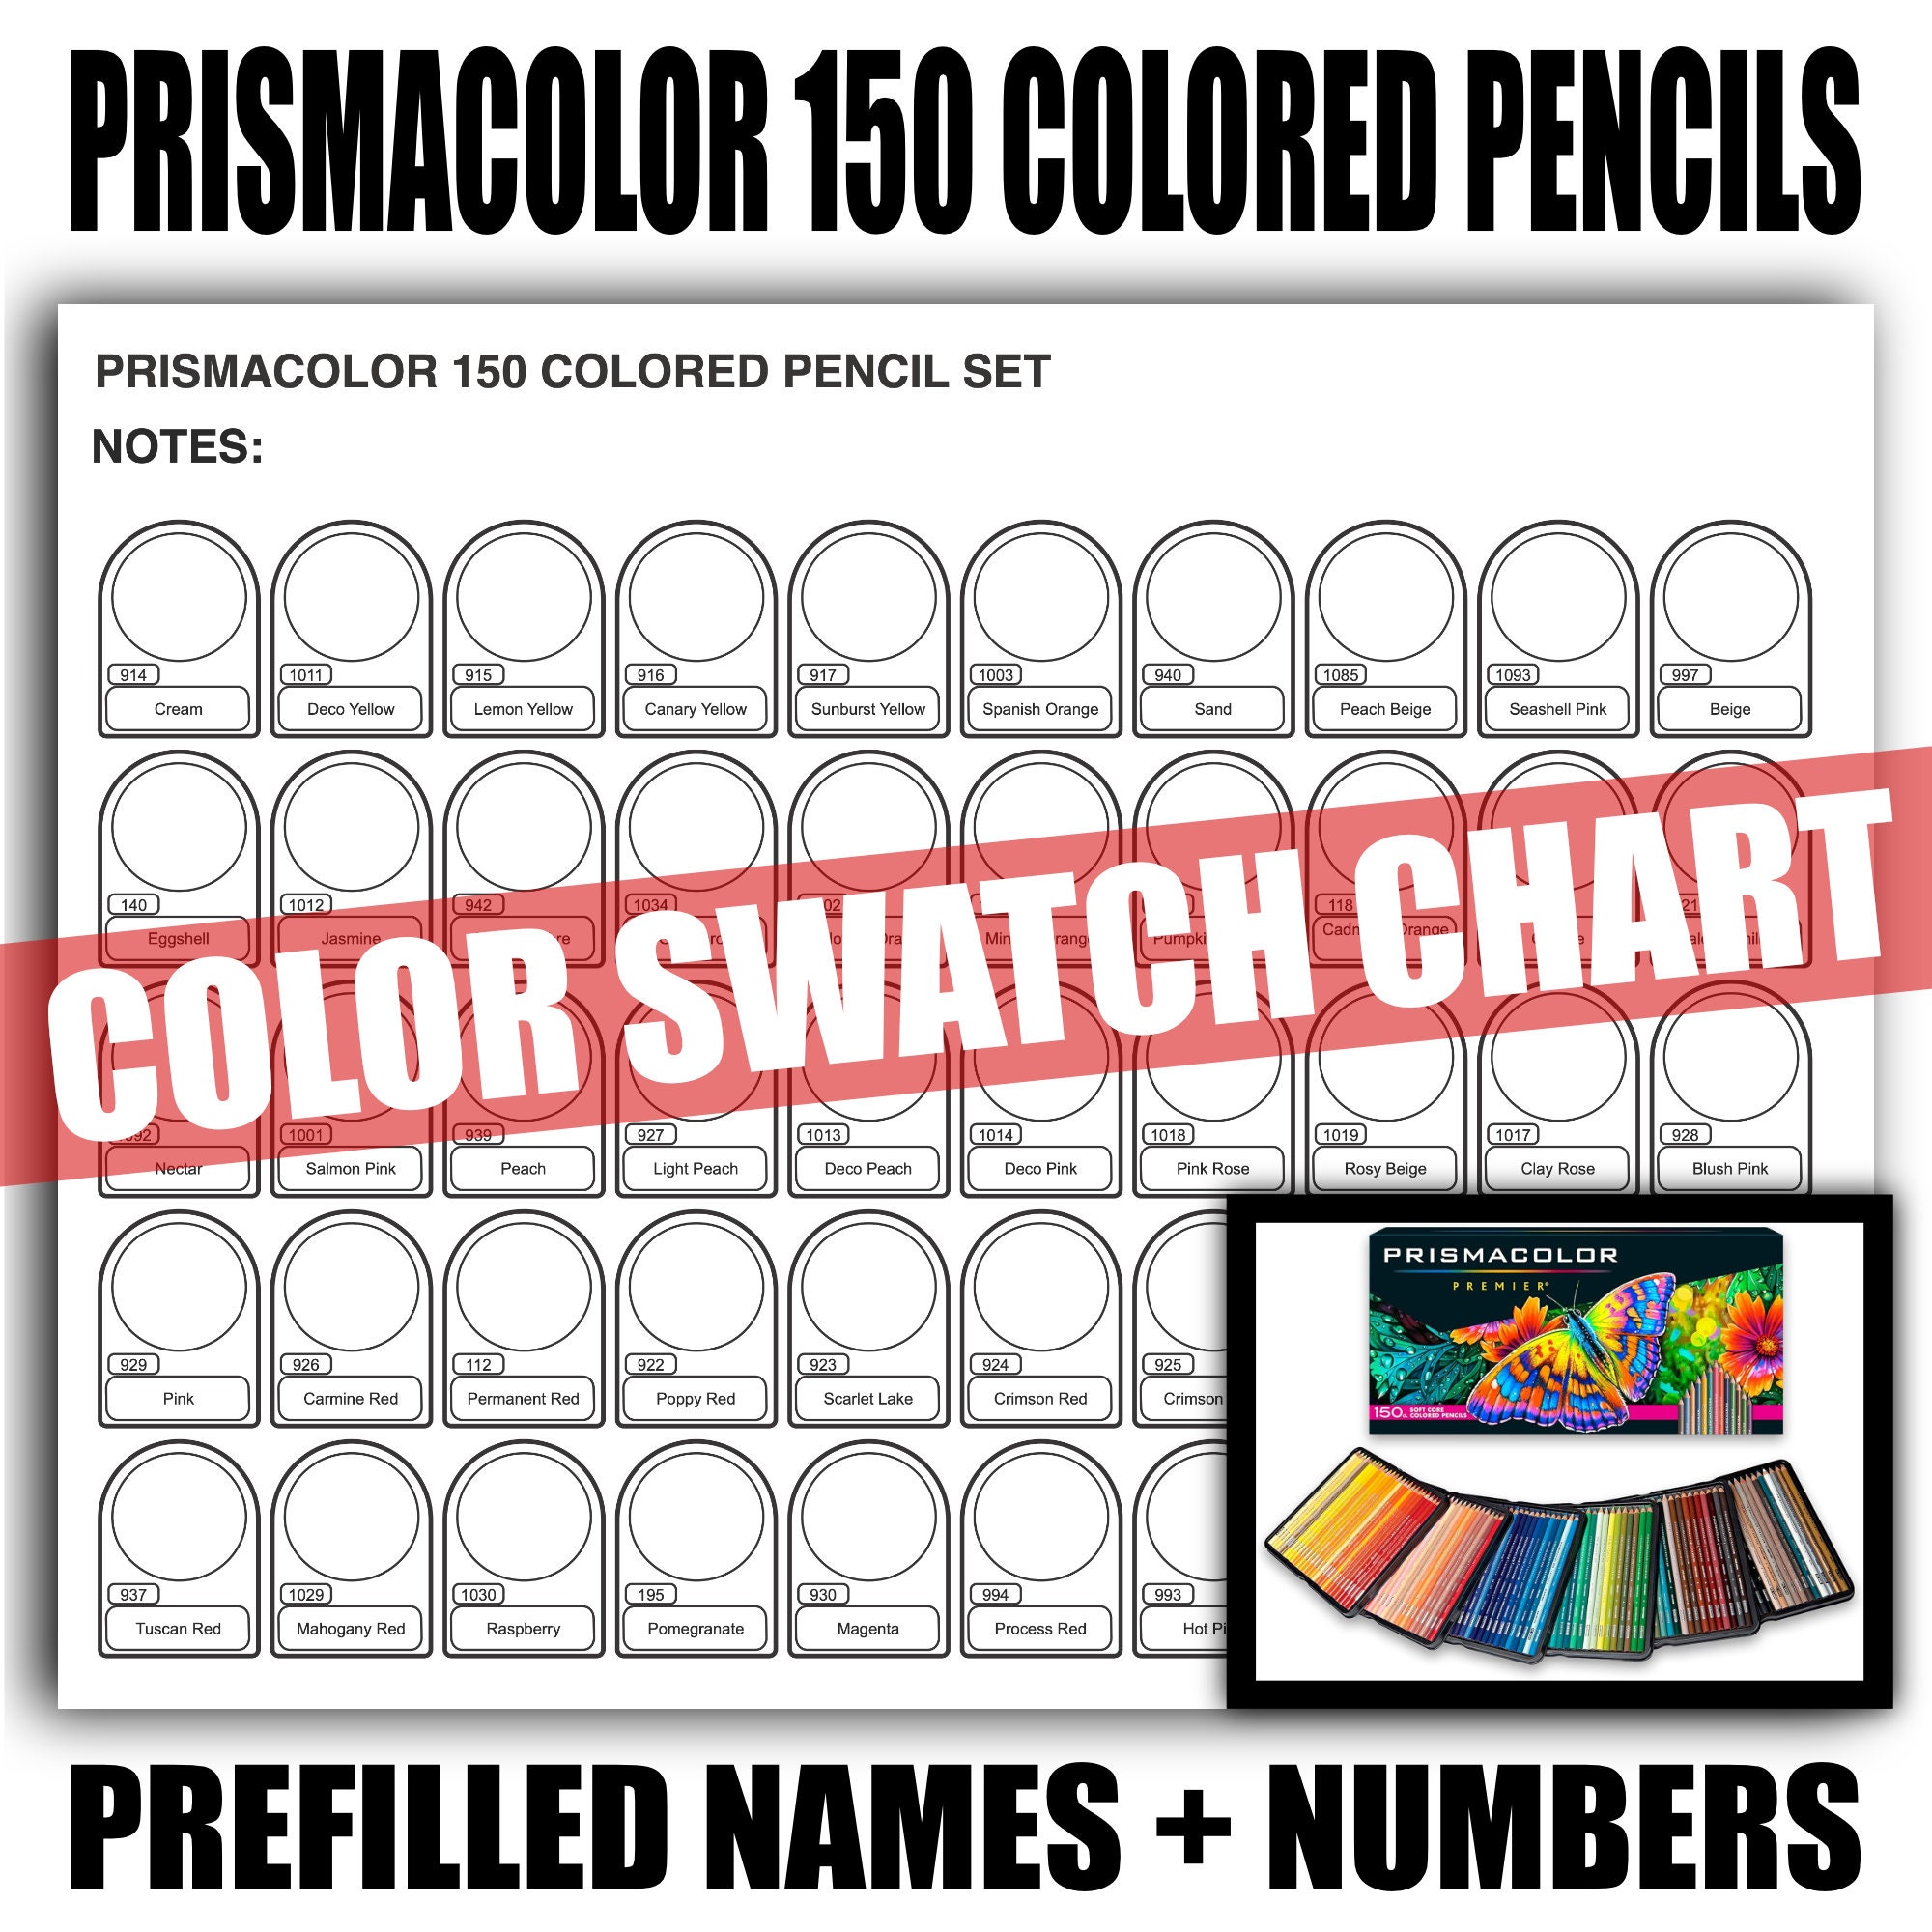 Crayola 150 Colored Pencil Set DIY Color Chart / Swatch Sheet Digital  Download 